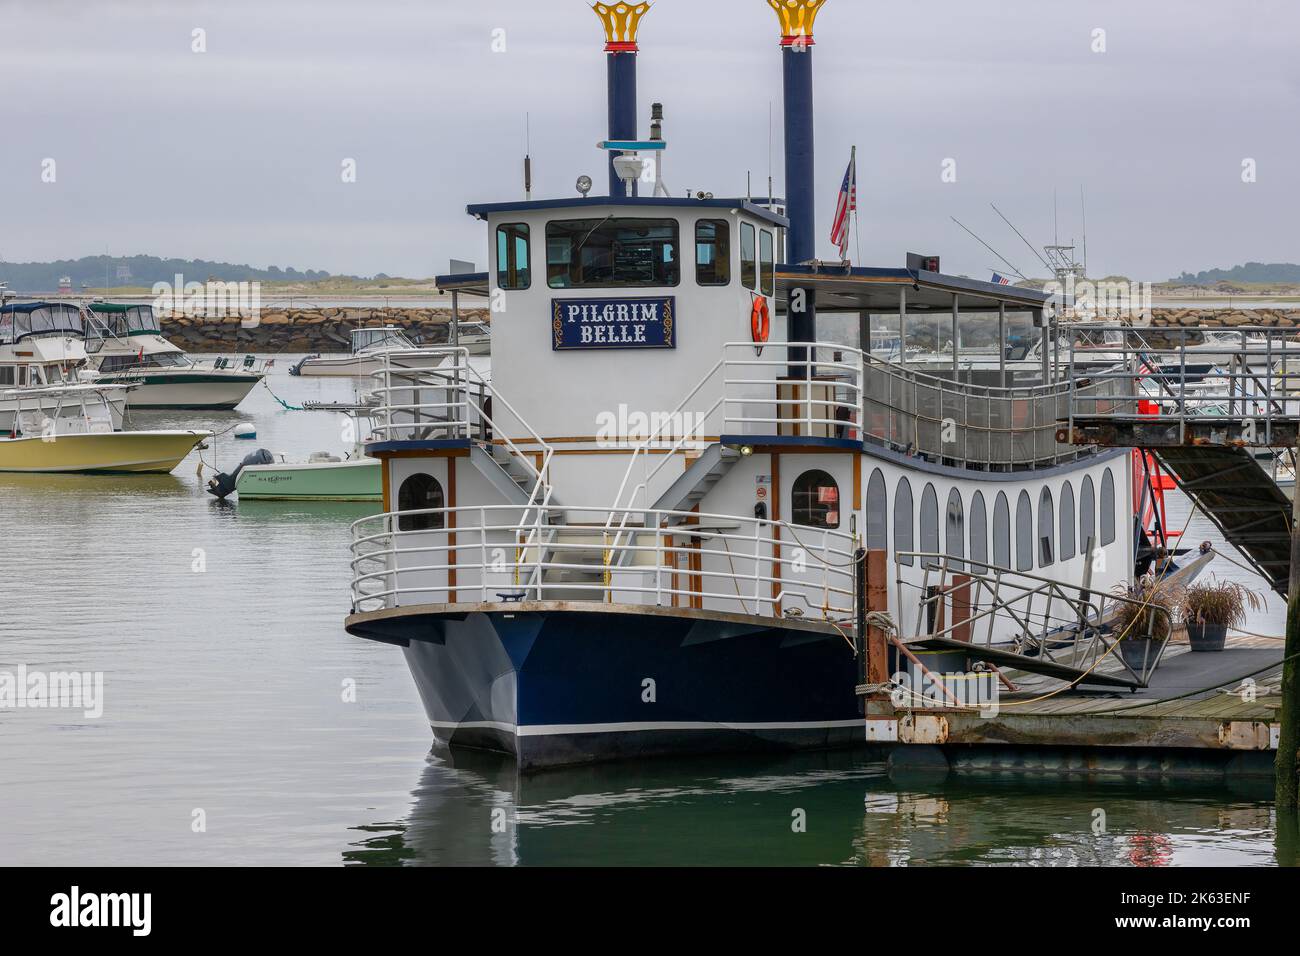 Plymouth, Massachusetts, USA - September 12, 2022: The Pilgrim Bell, apaddlewheel boat, docked in Plymouth Harbor on Cape Bay. Stock Photo